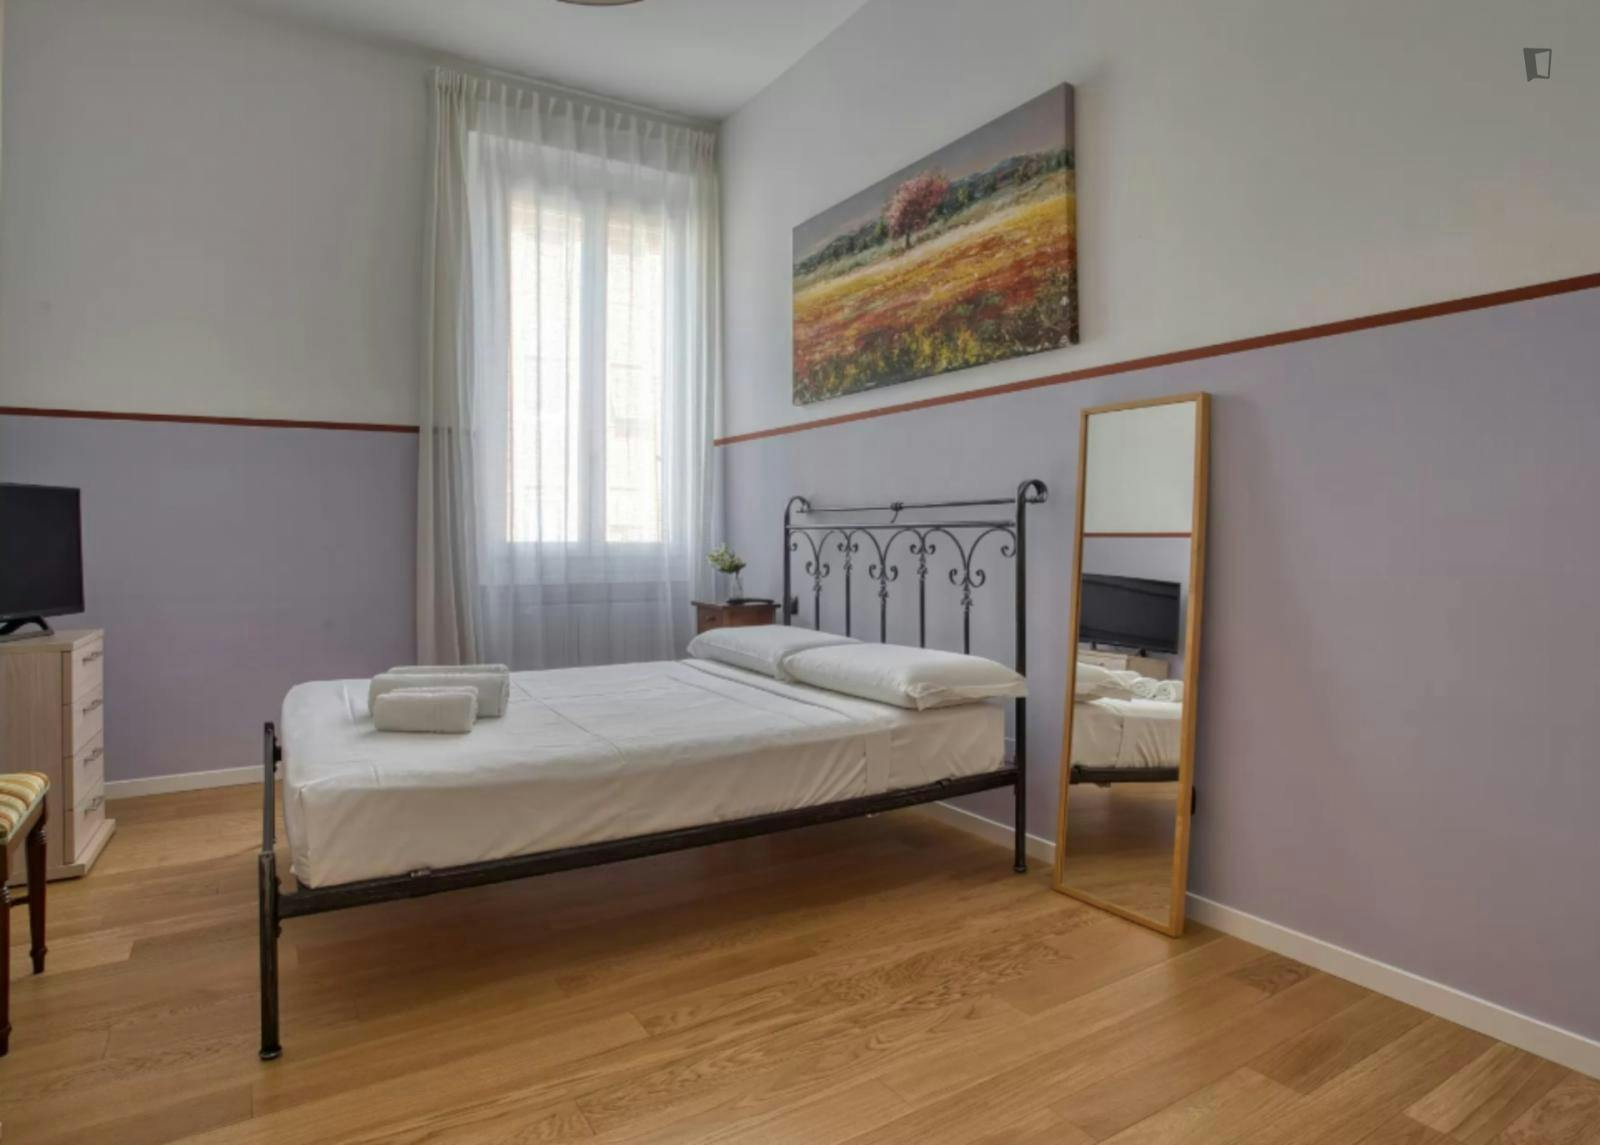 Stylish 1-bedroom apartment near Vittorio Formentano Park